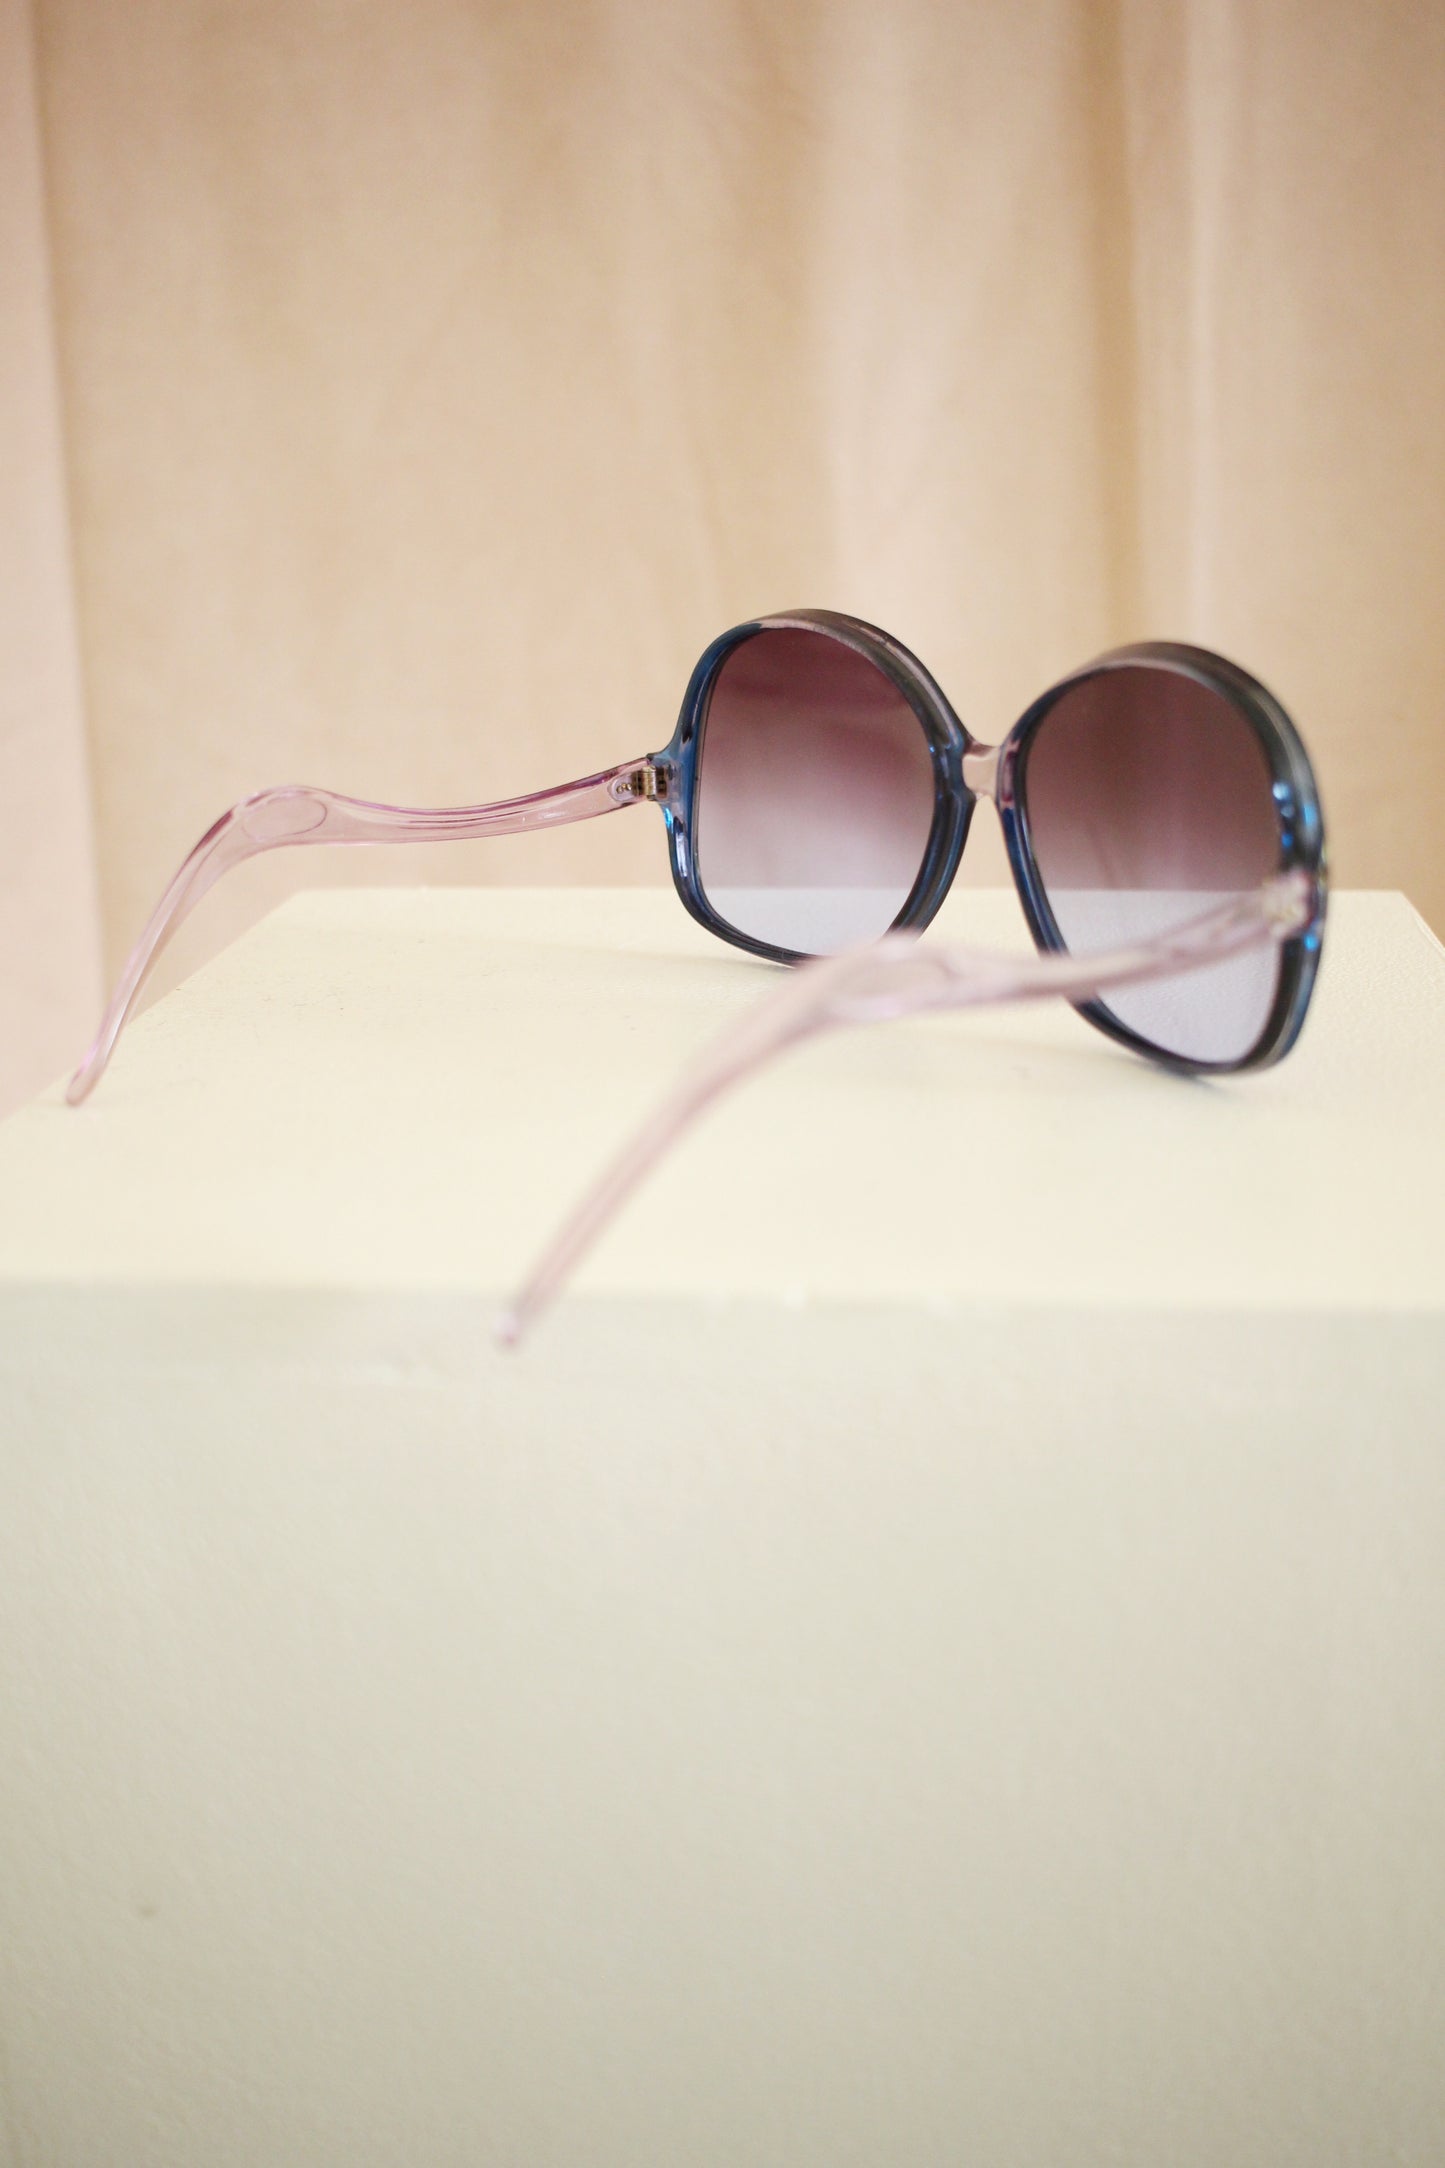 70s Sunglasses - Purple with Blue Frame